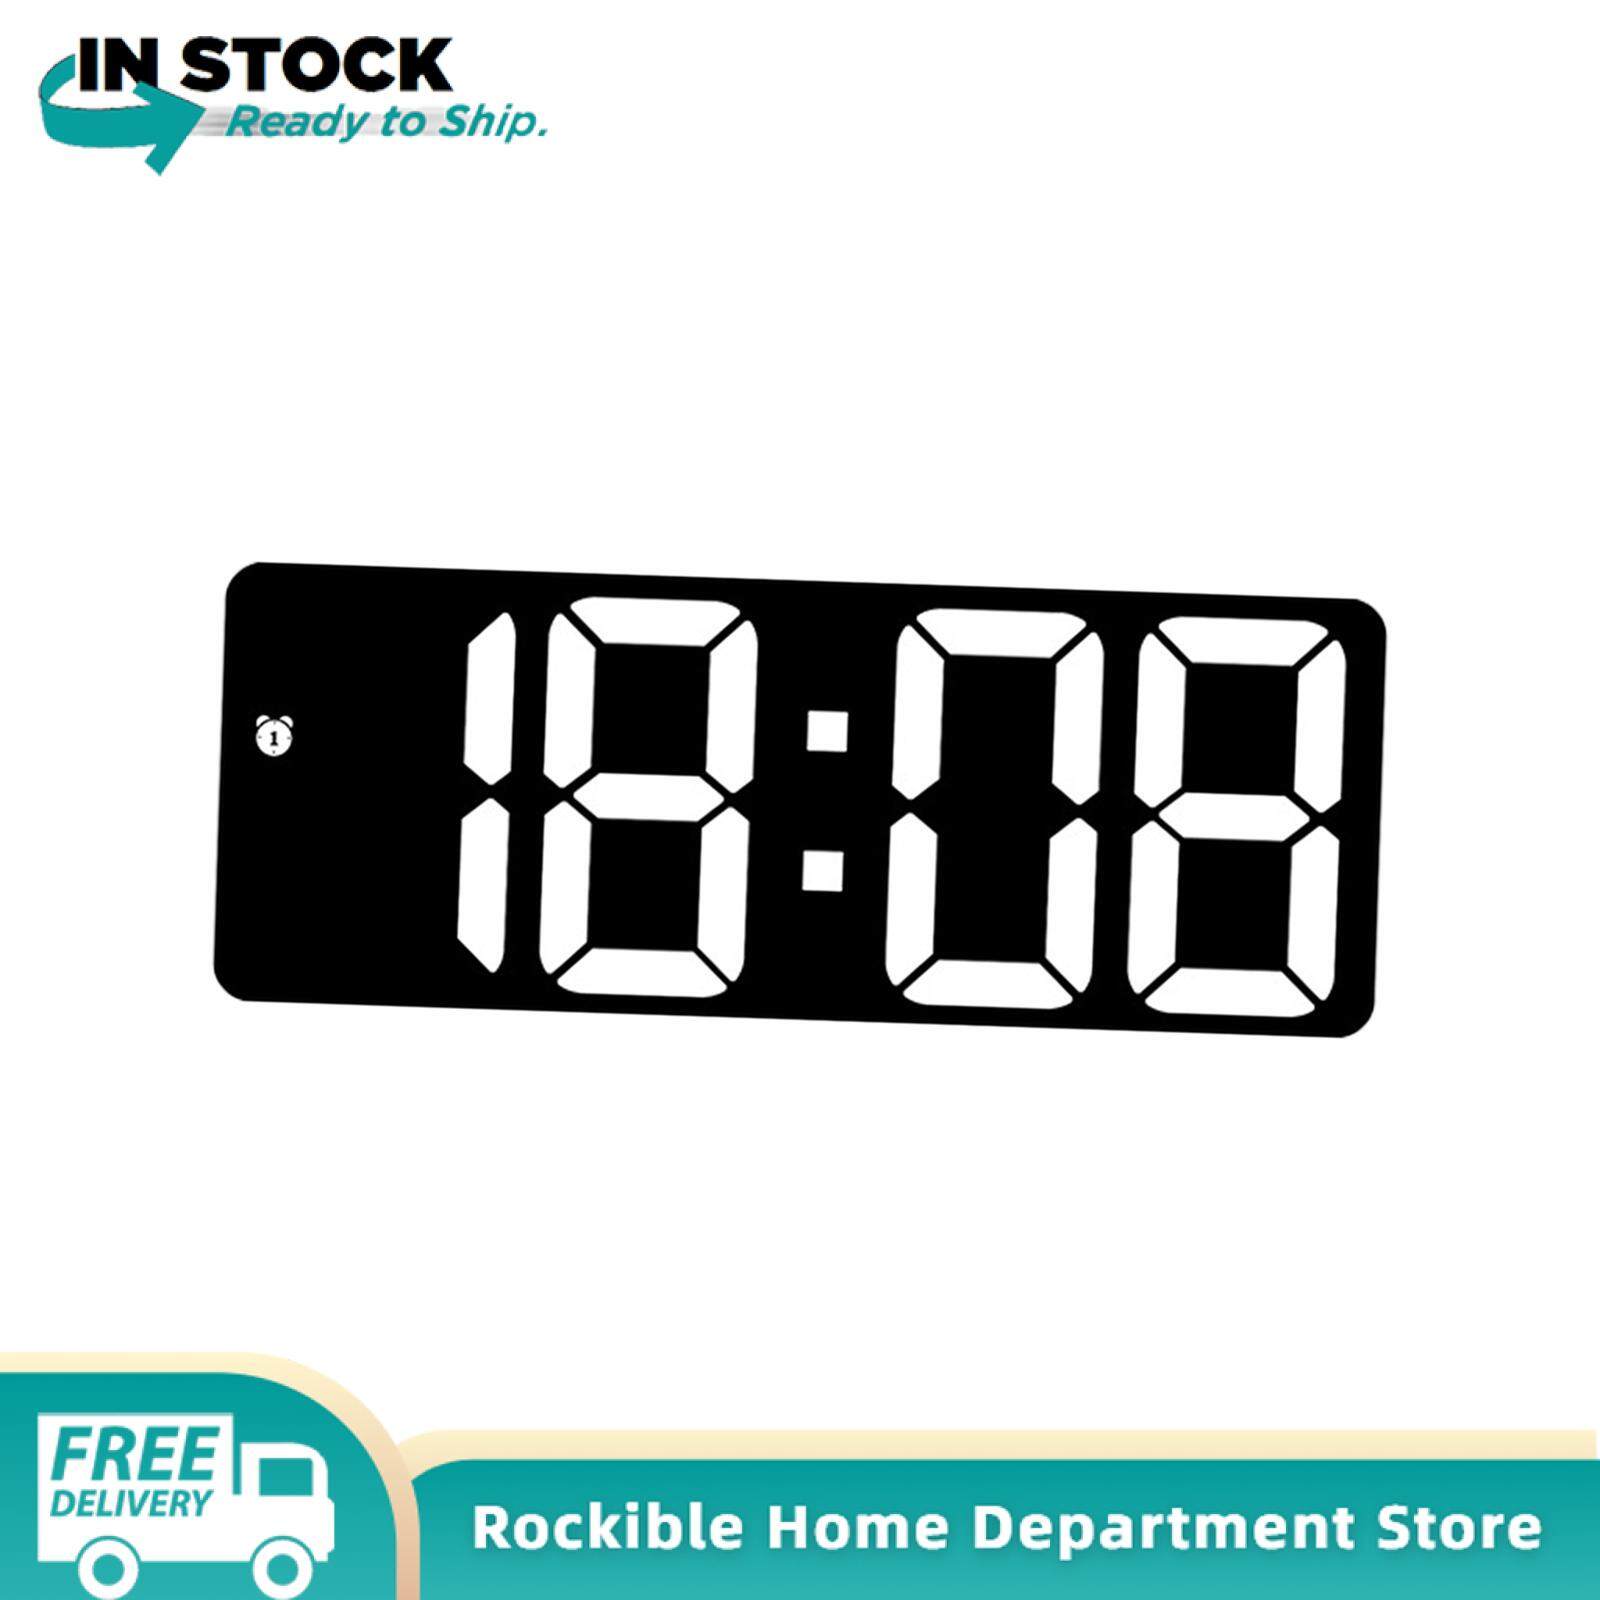 rockible Digital Wall Clock LED Alarm Clock Table Calendar Voice Control